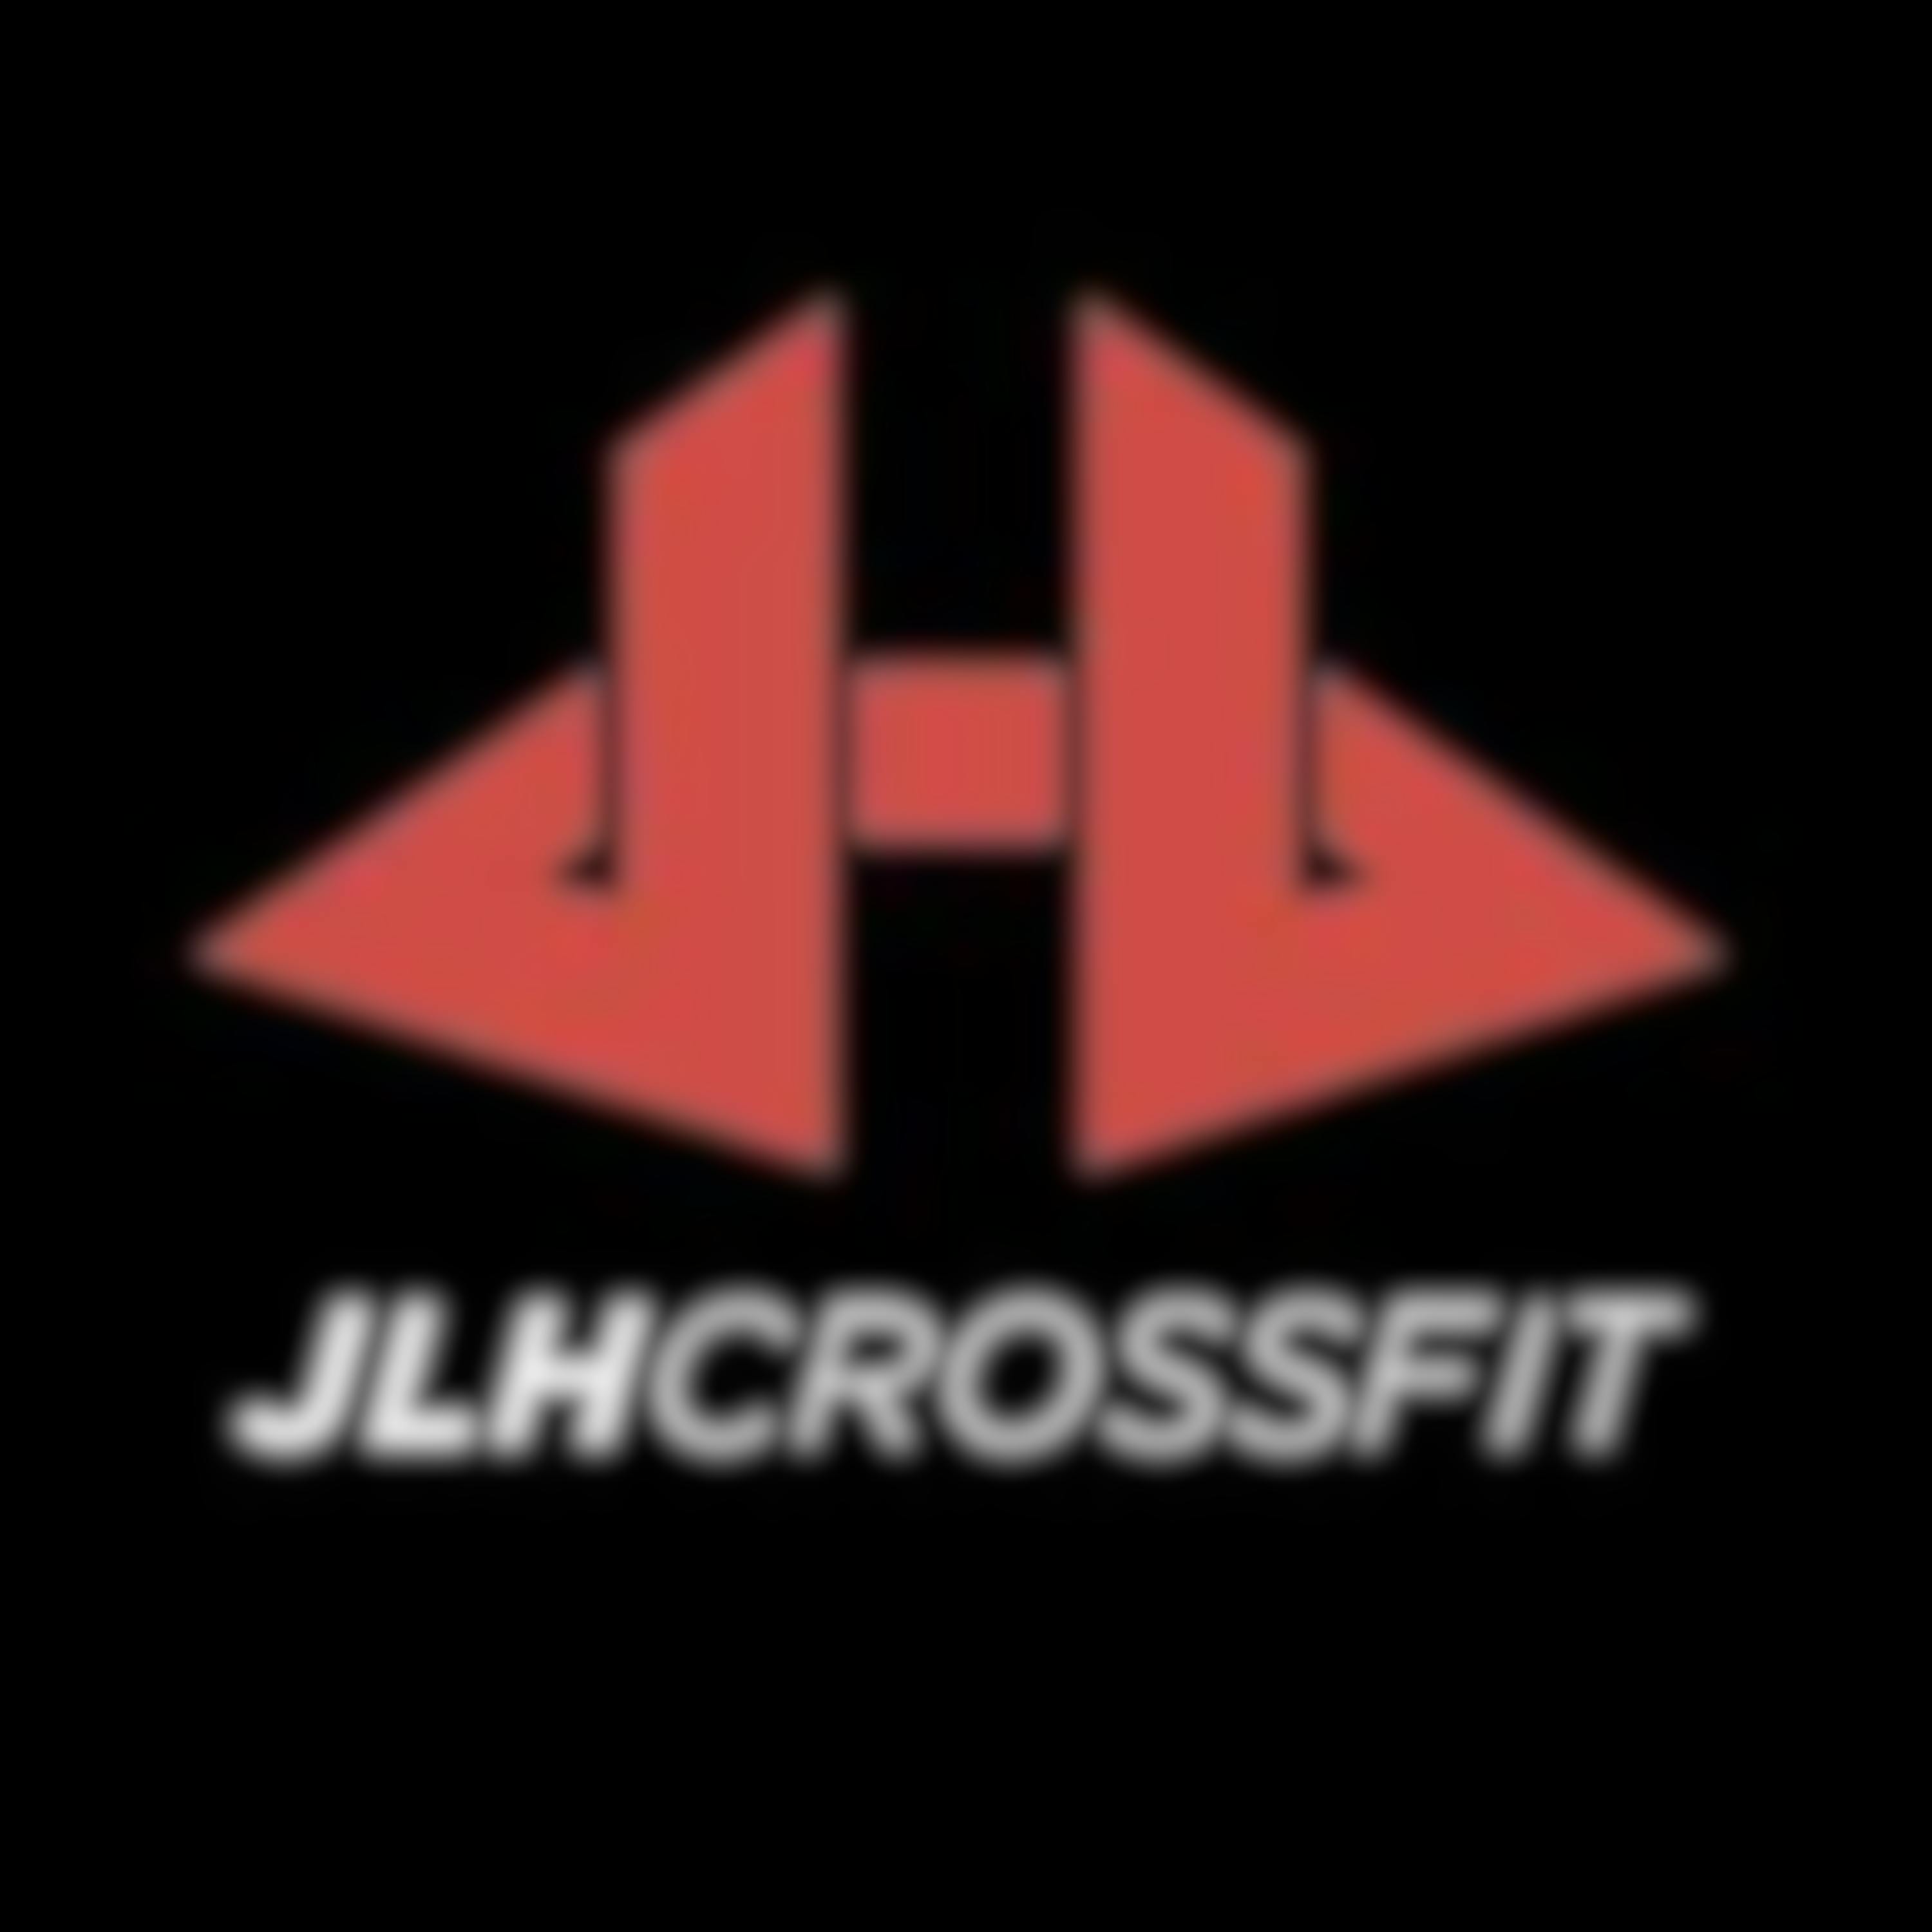 JLH CrossFit